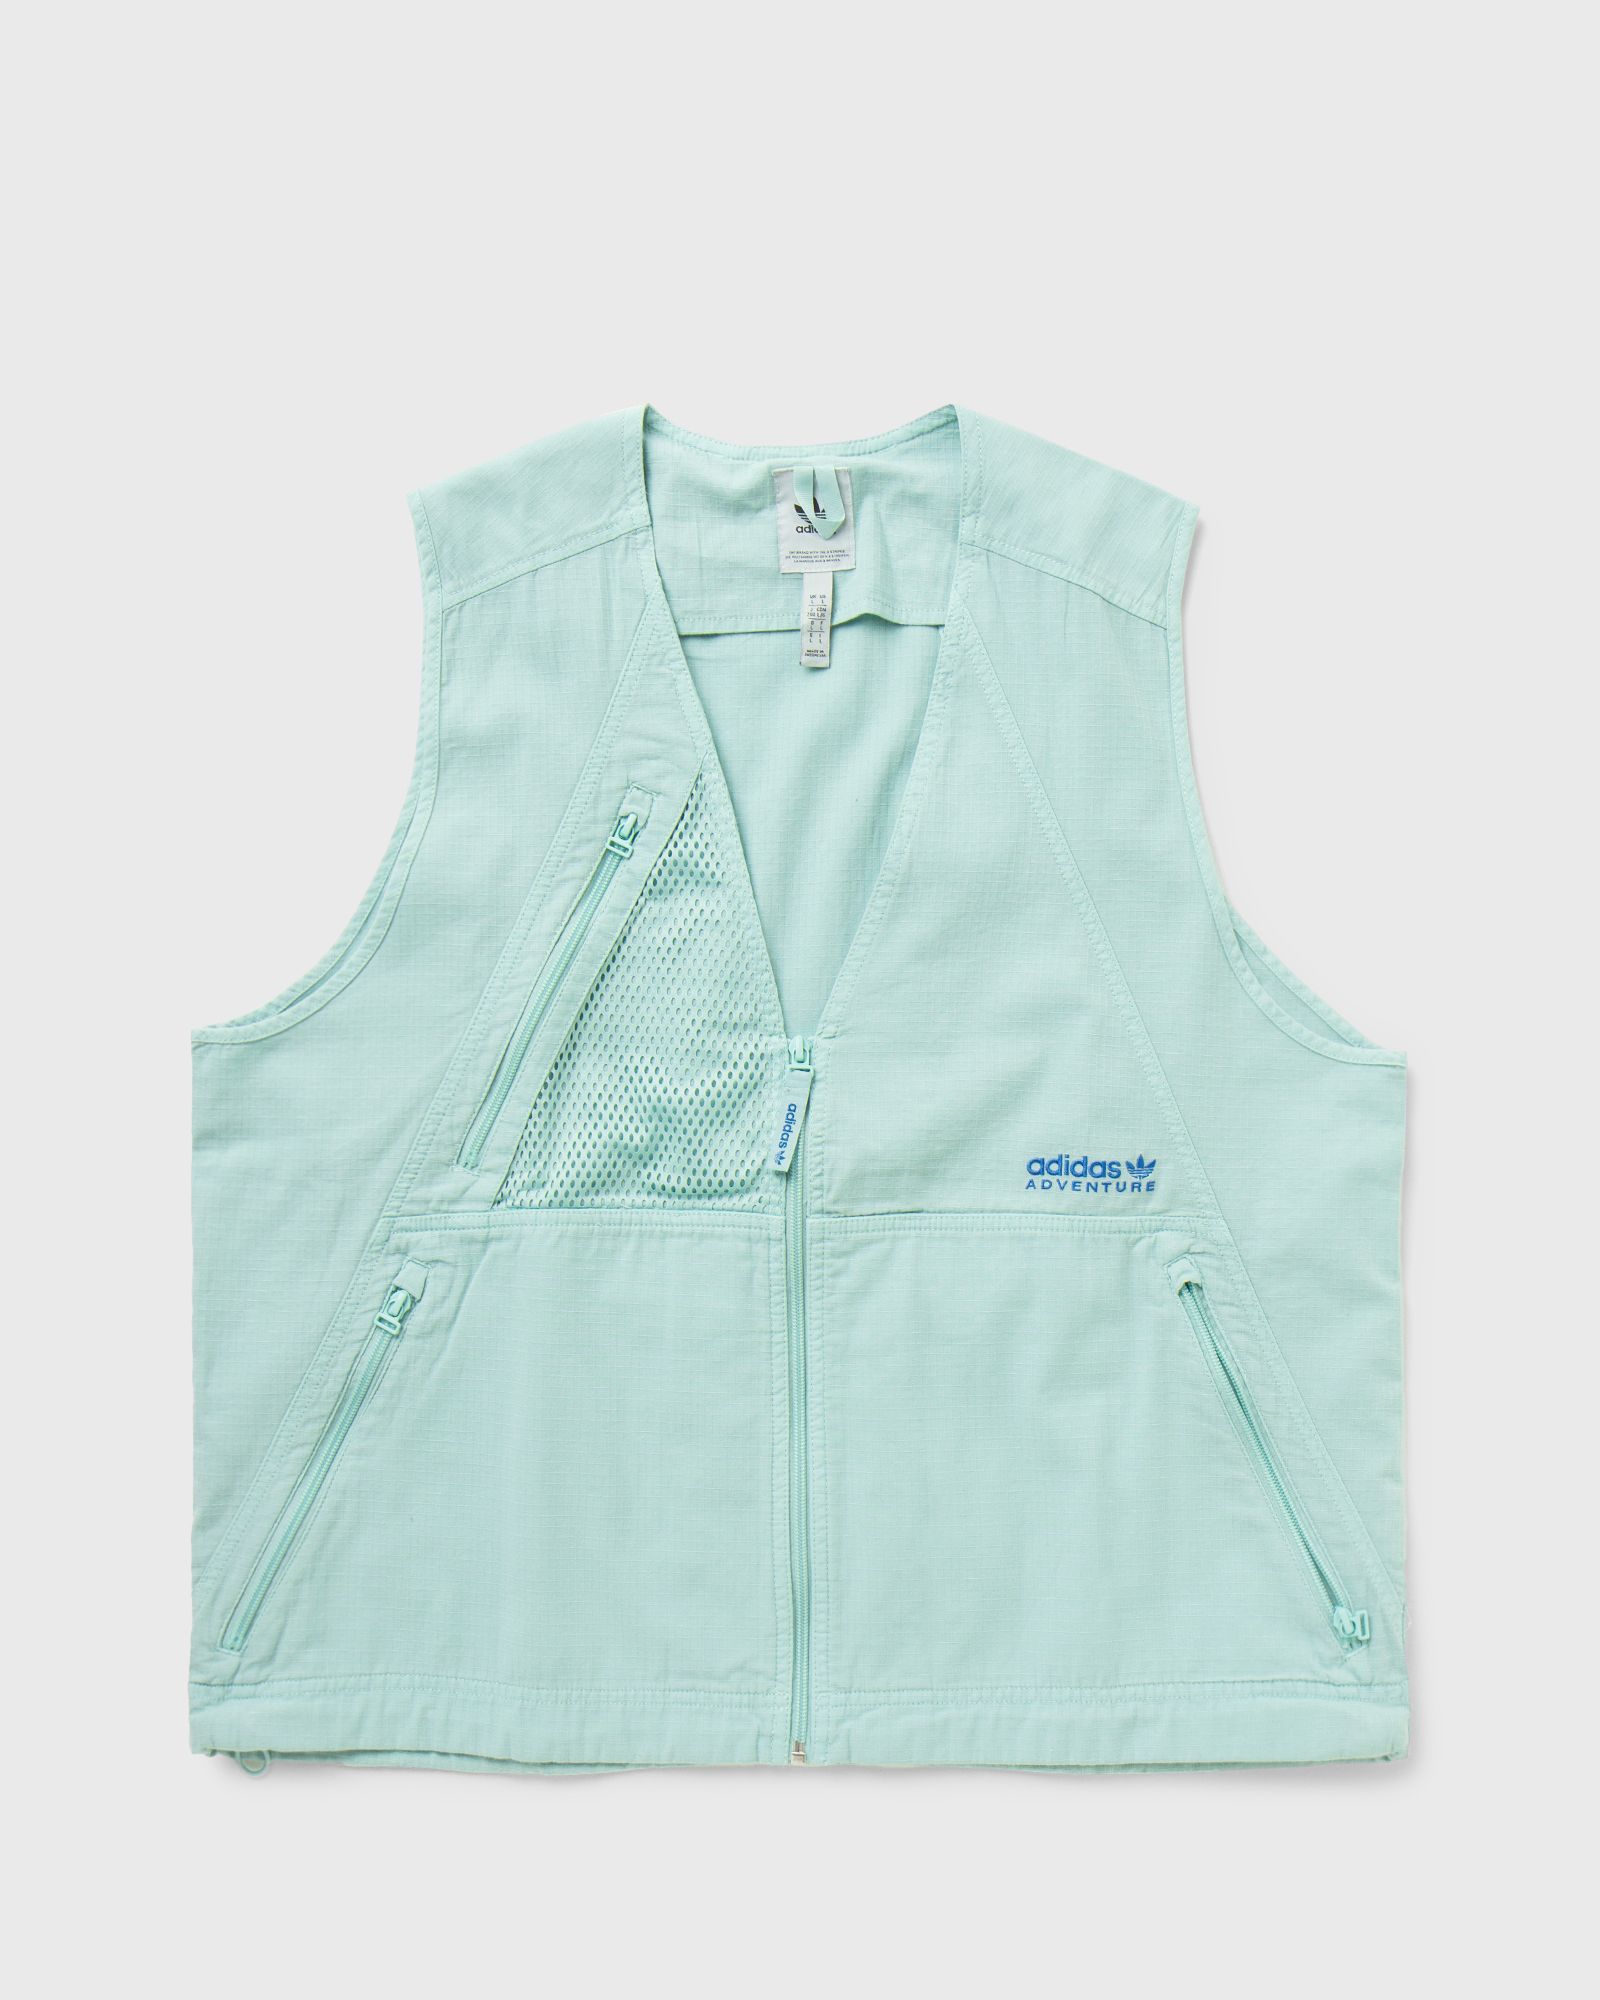 Adidas - sw vest men vests green in größe:xl